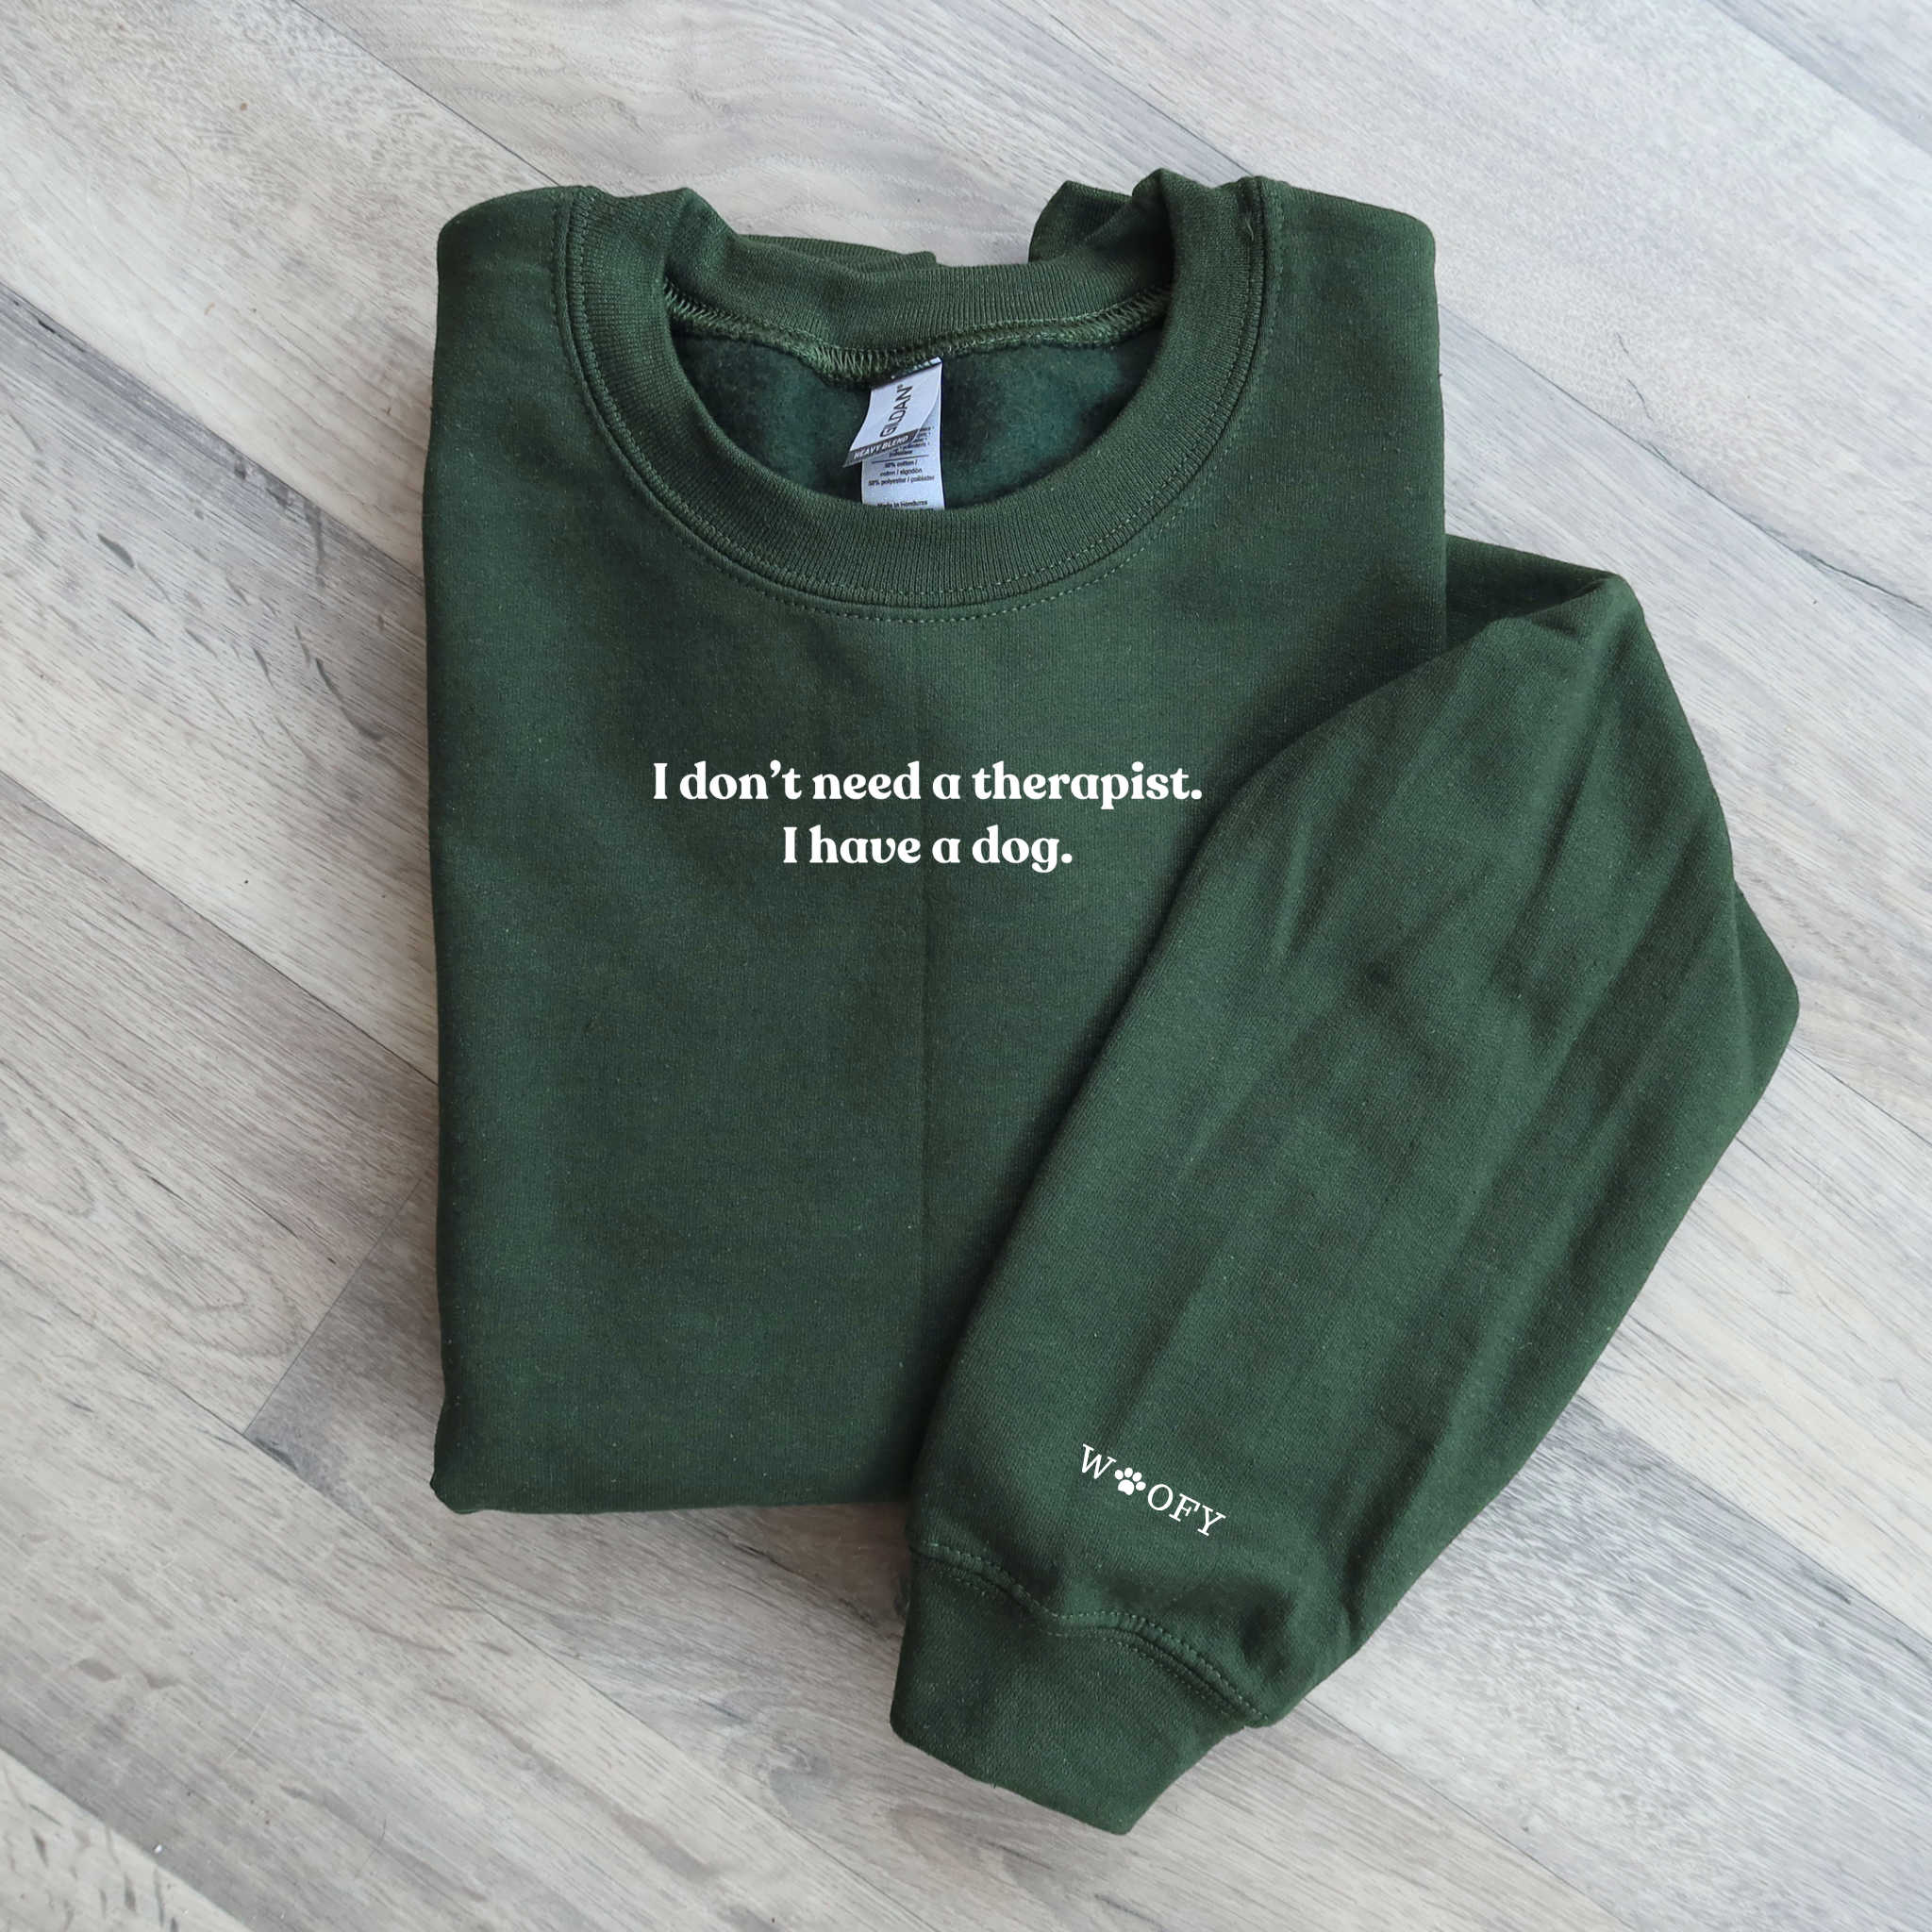 'I don't need a therapist' sweatshirt